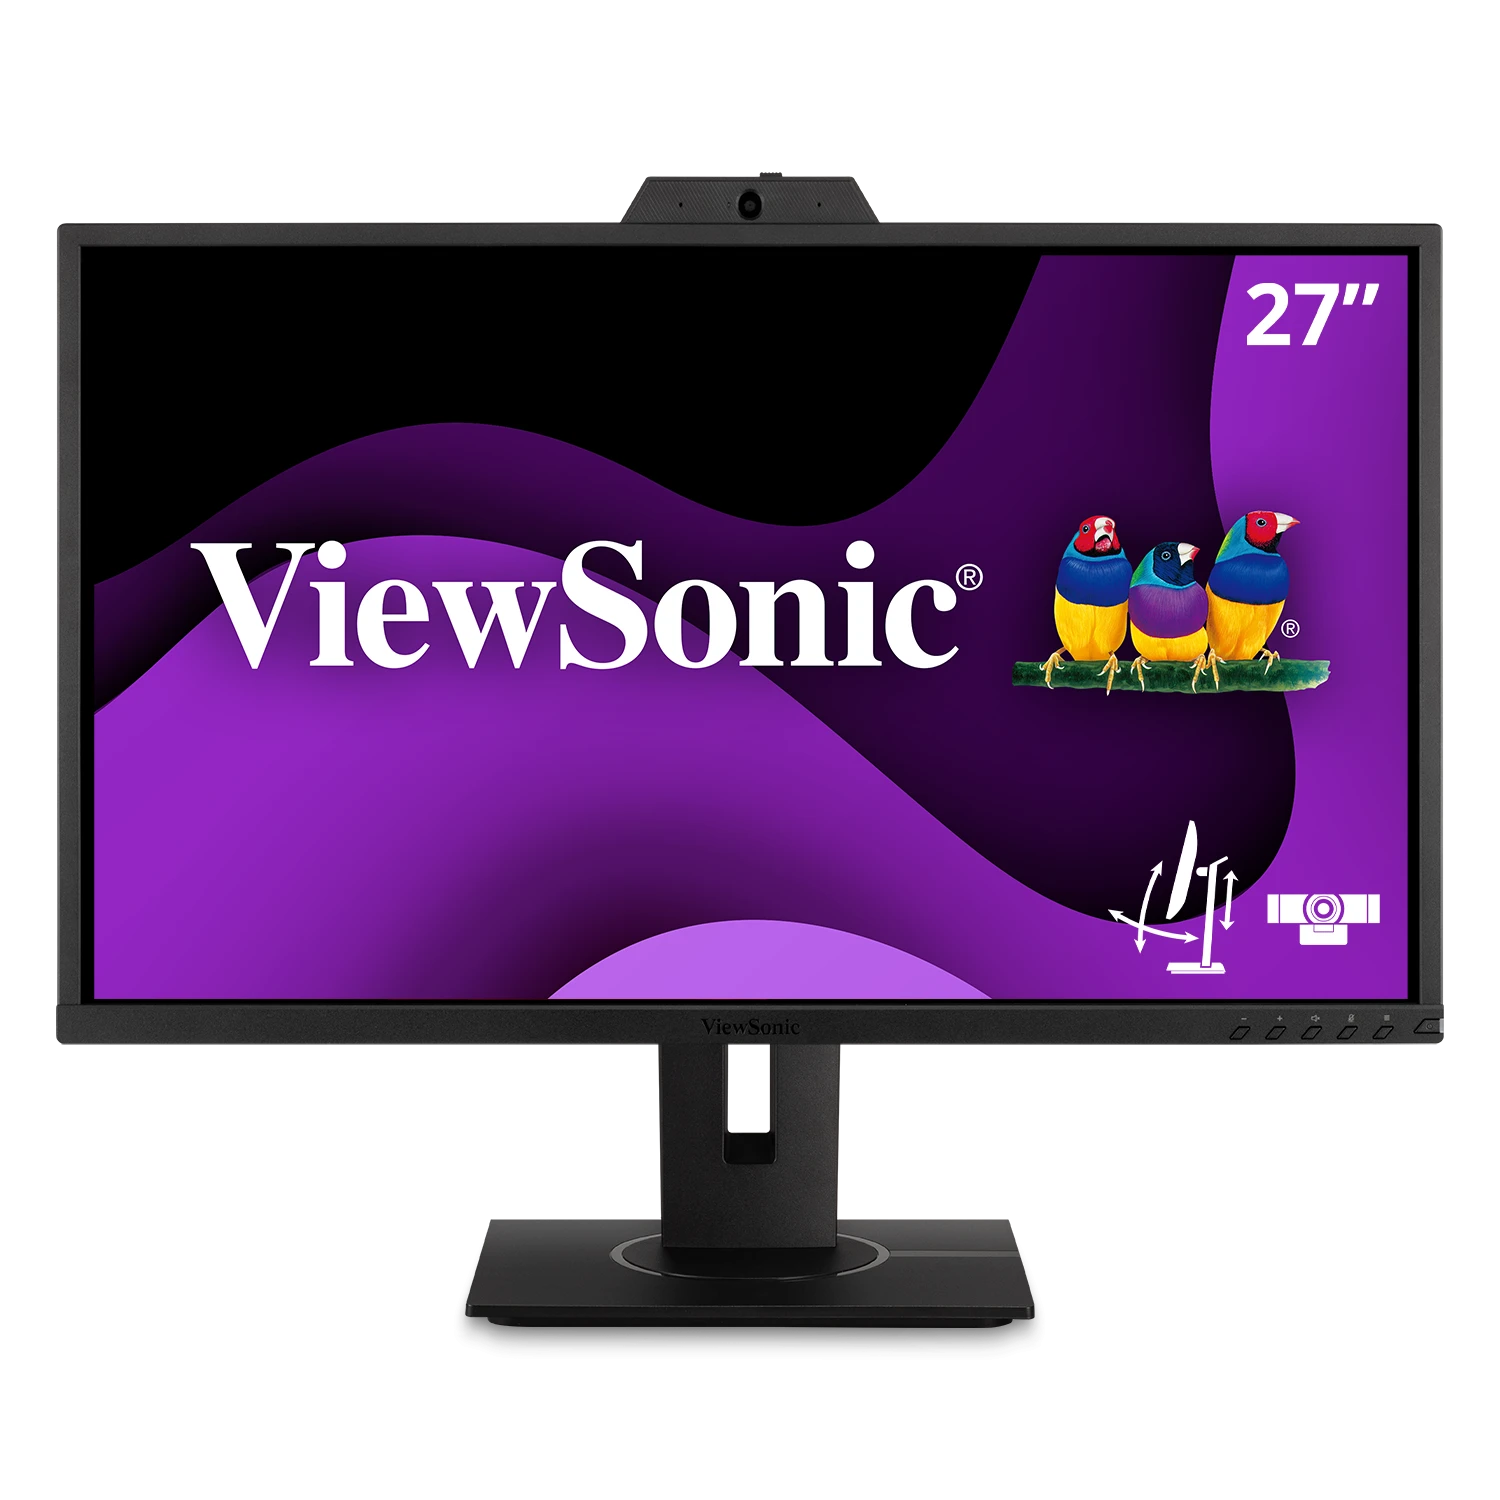 Viewsonic VG2740V 27" | 1080P 60Hz IPS Monitor